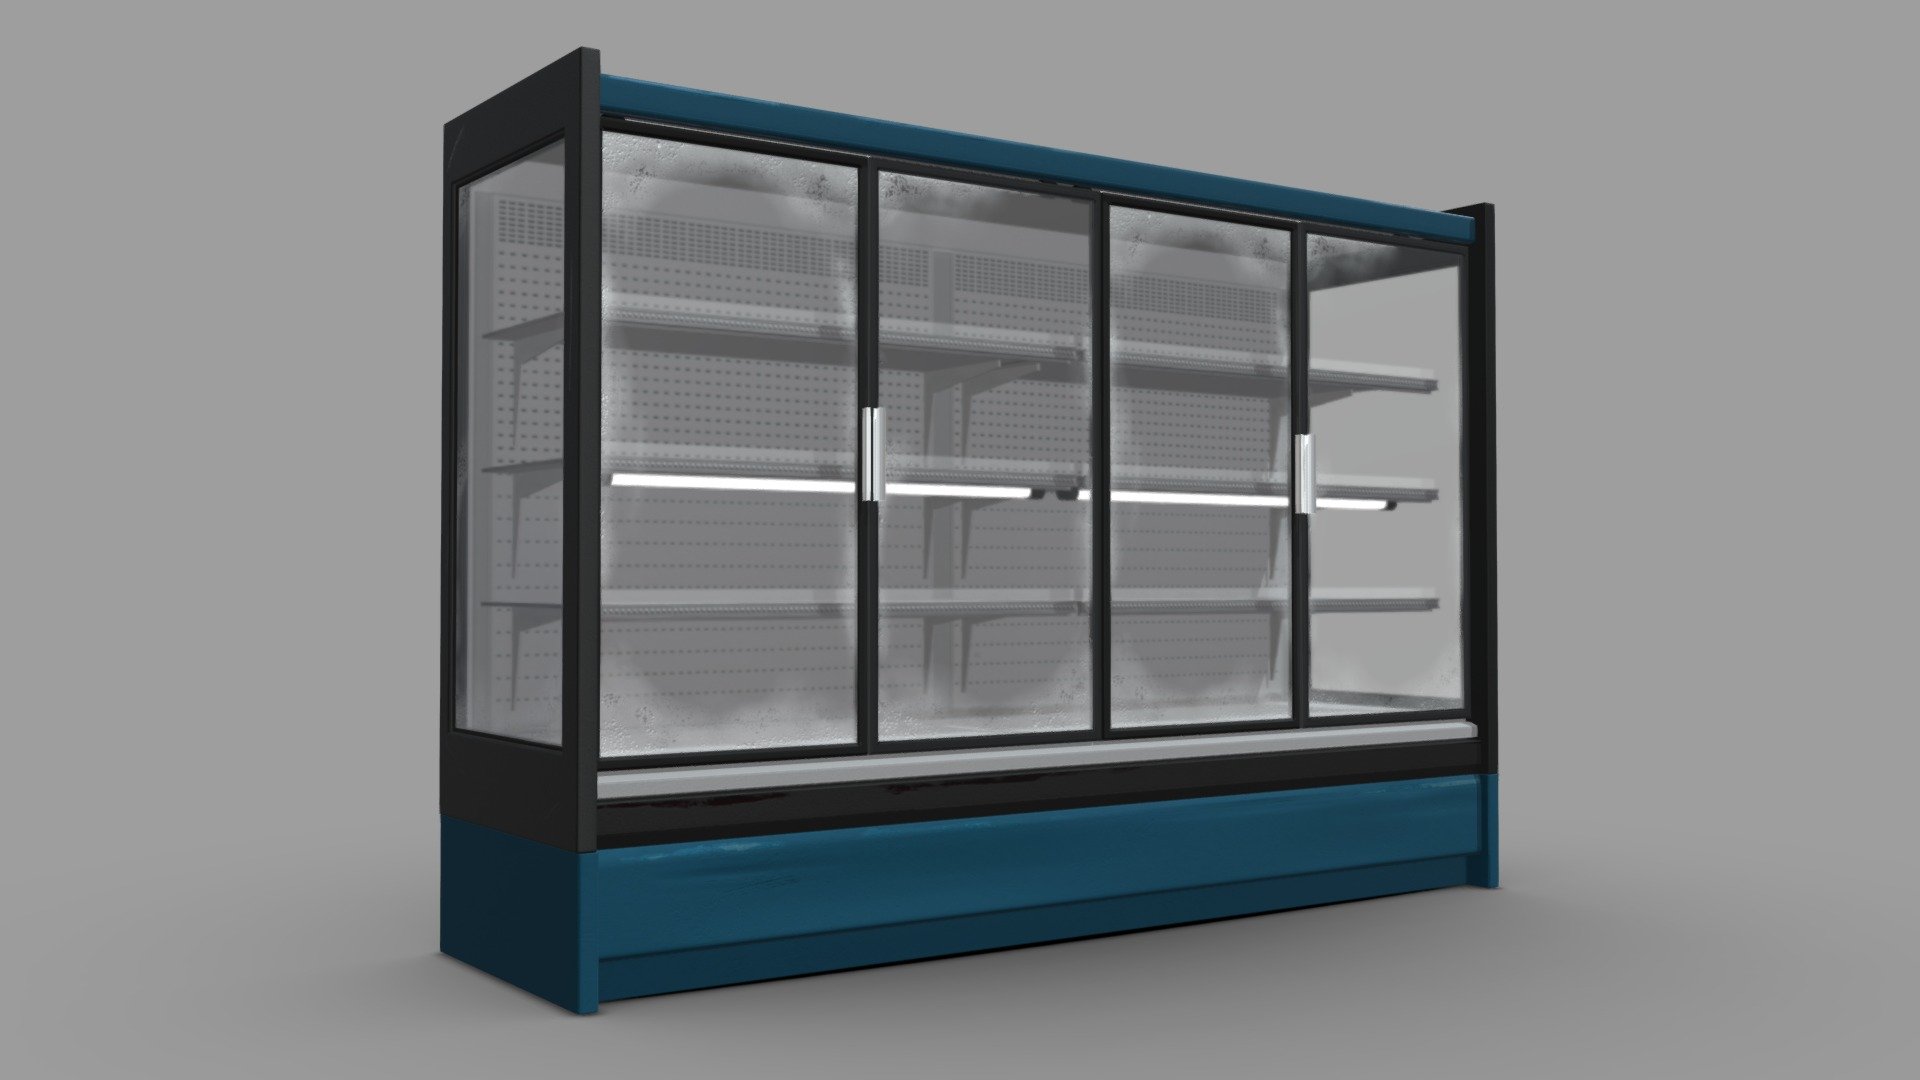 Professionnal fridge for a professional project.
Blender and Photoshop

Designed for VR*
(steamvr editor) - Food shop showcase - Download Free 3D model by bretzel44 3d model